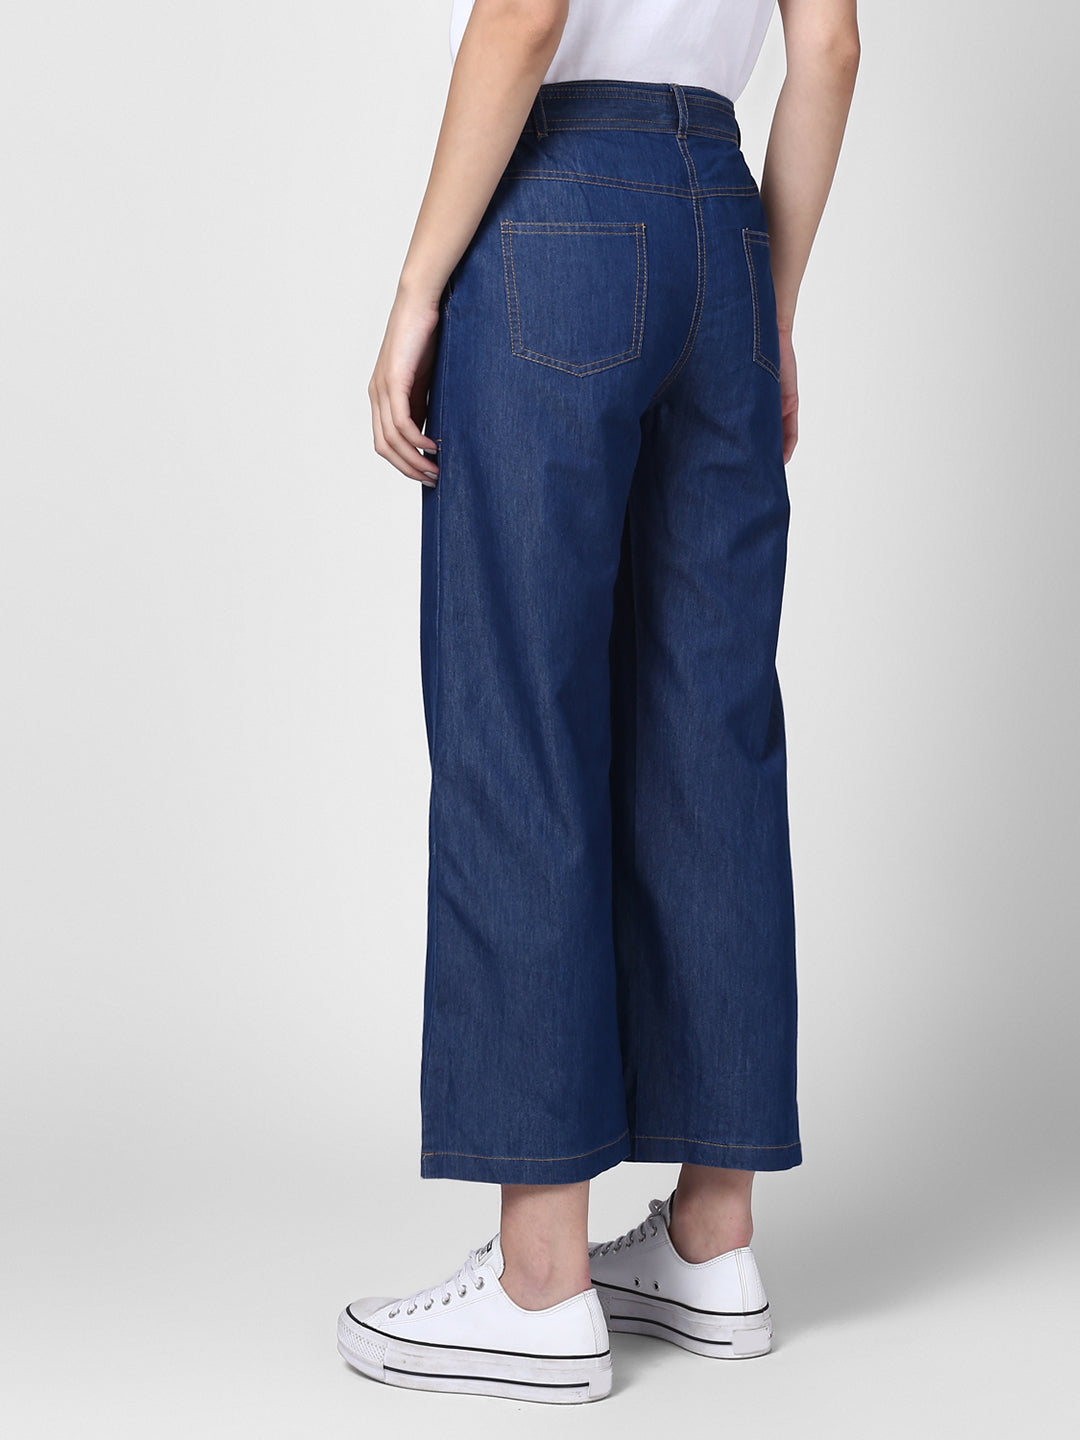 Women's Blue Denim Trousers with belt